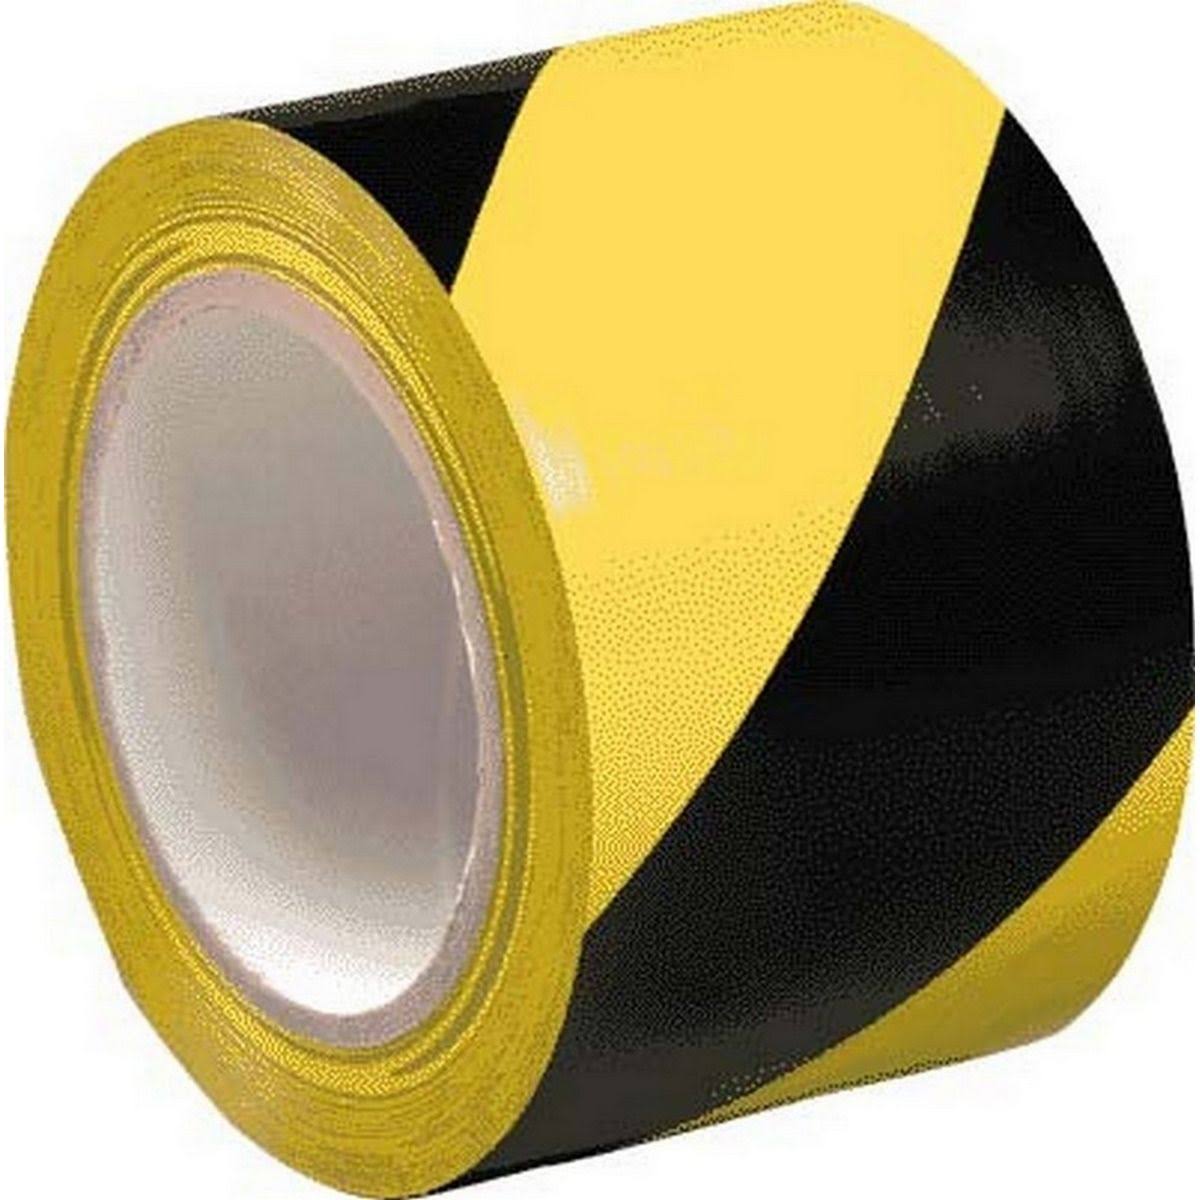 Ultratape PVC Hazard Warning Tape - Black and Yellow, 50mm x 33m